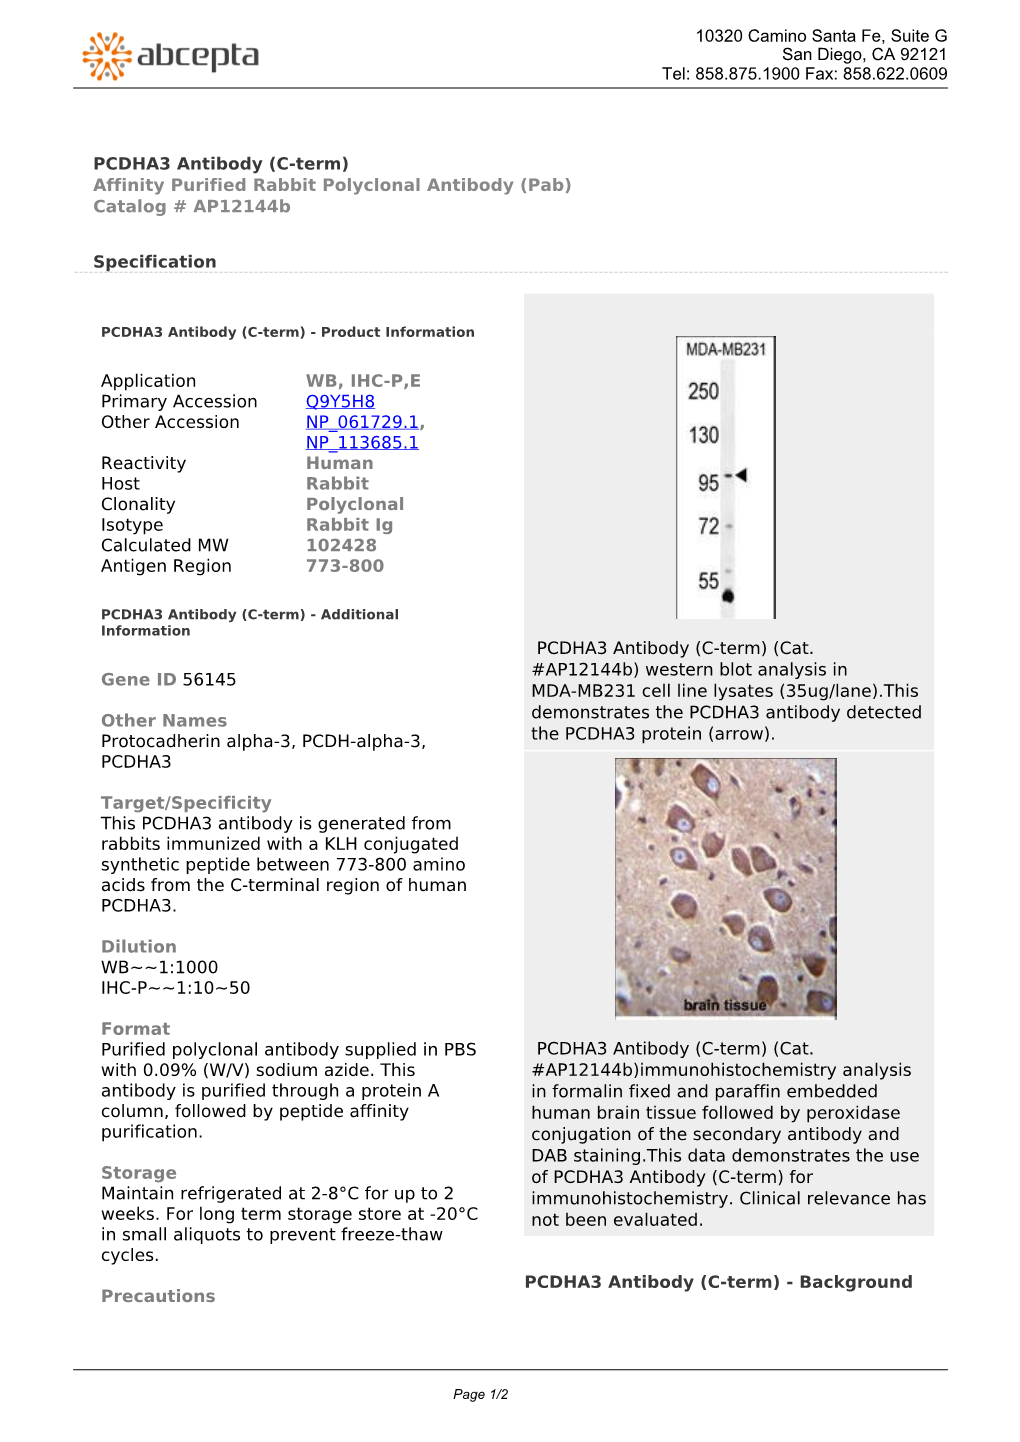 PCDHA3 Antibody (C-Term) Affinity Purified Rabbit Polyclonal Antibody (Pab) Catalog # Ap12144b